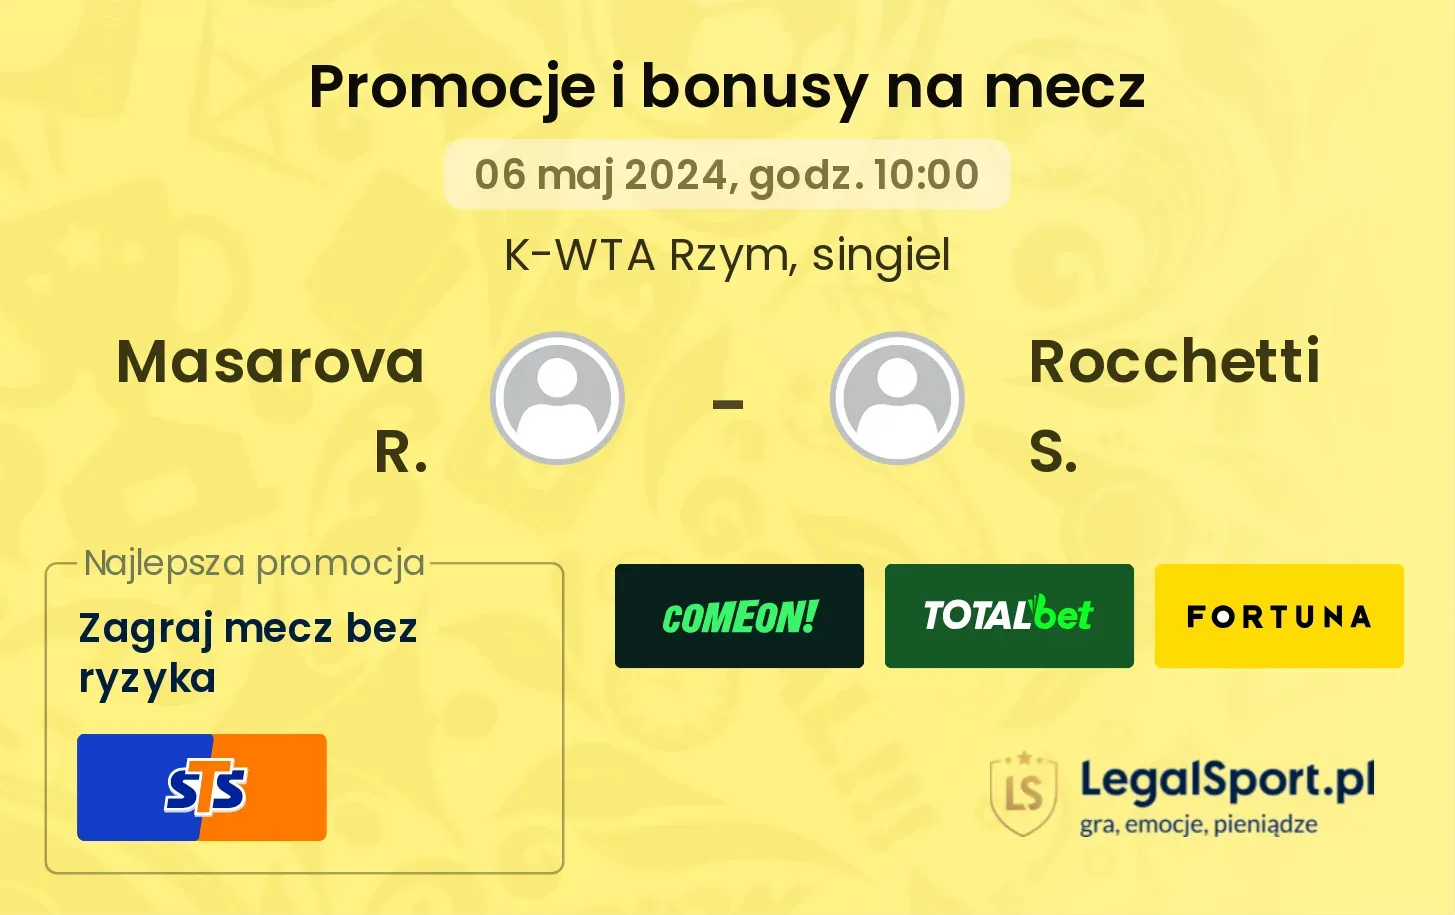 Masarova R. - Rocchetti S. promocje bonusy na mecz